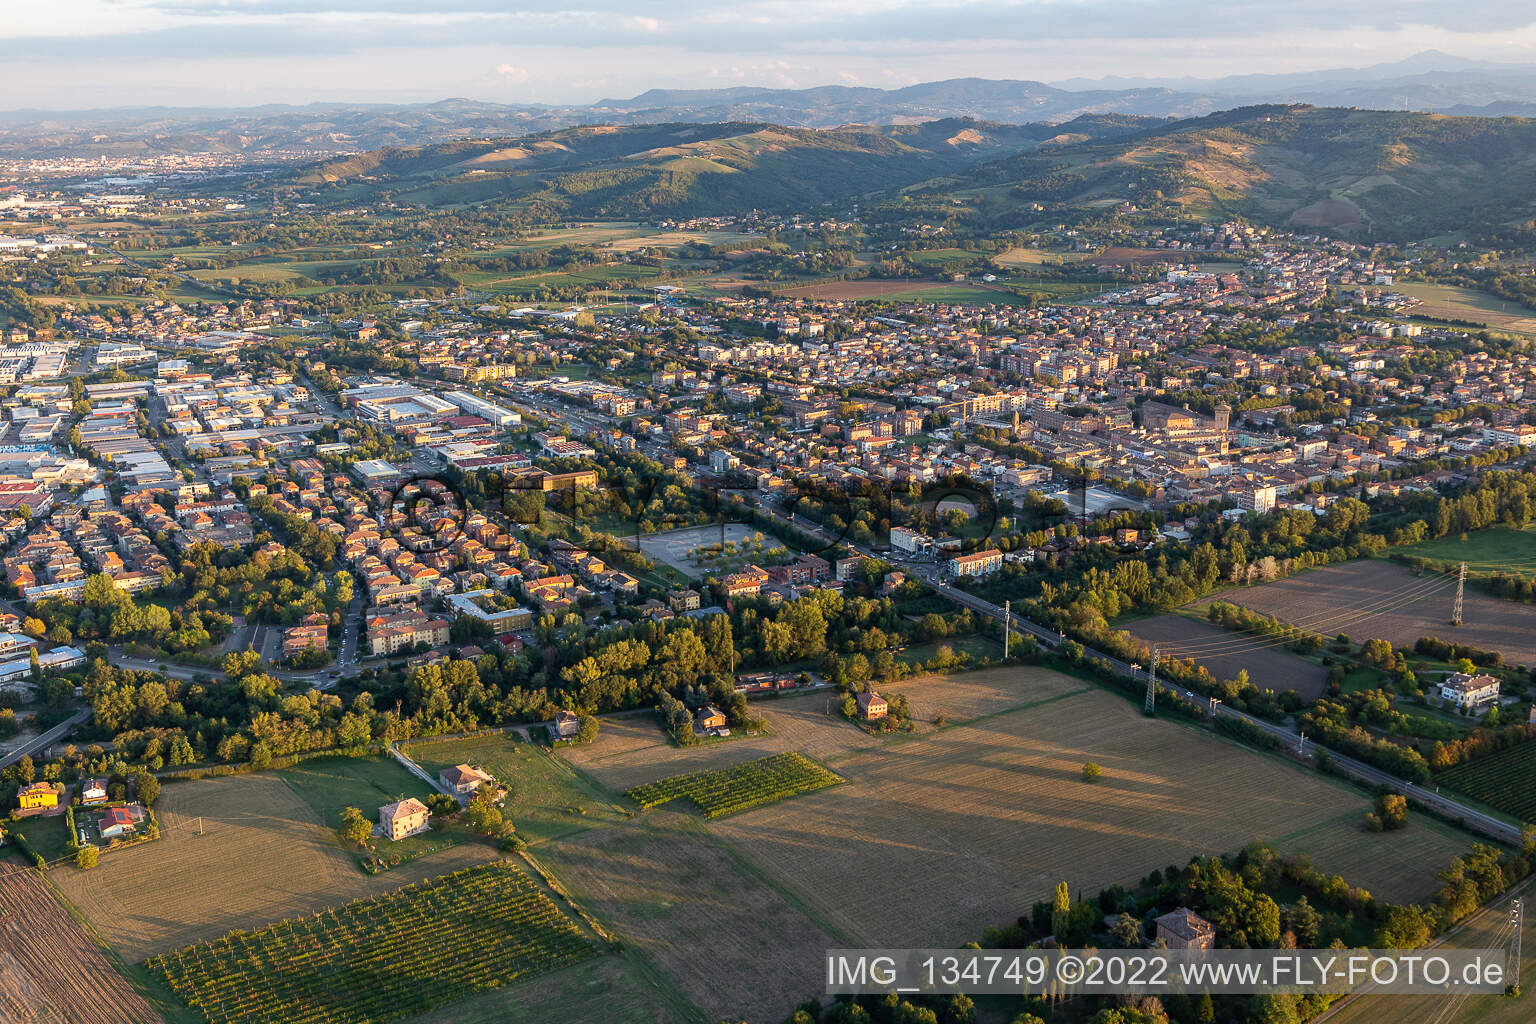 Aerial view of Scandiano in the state Reggio Emilia, Italy